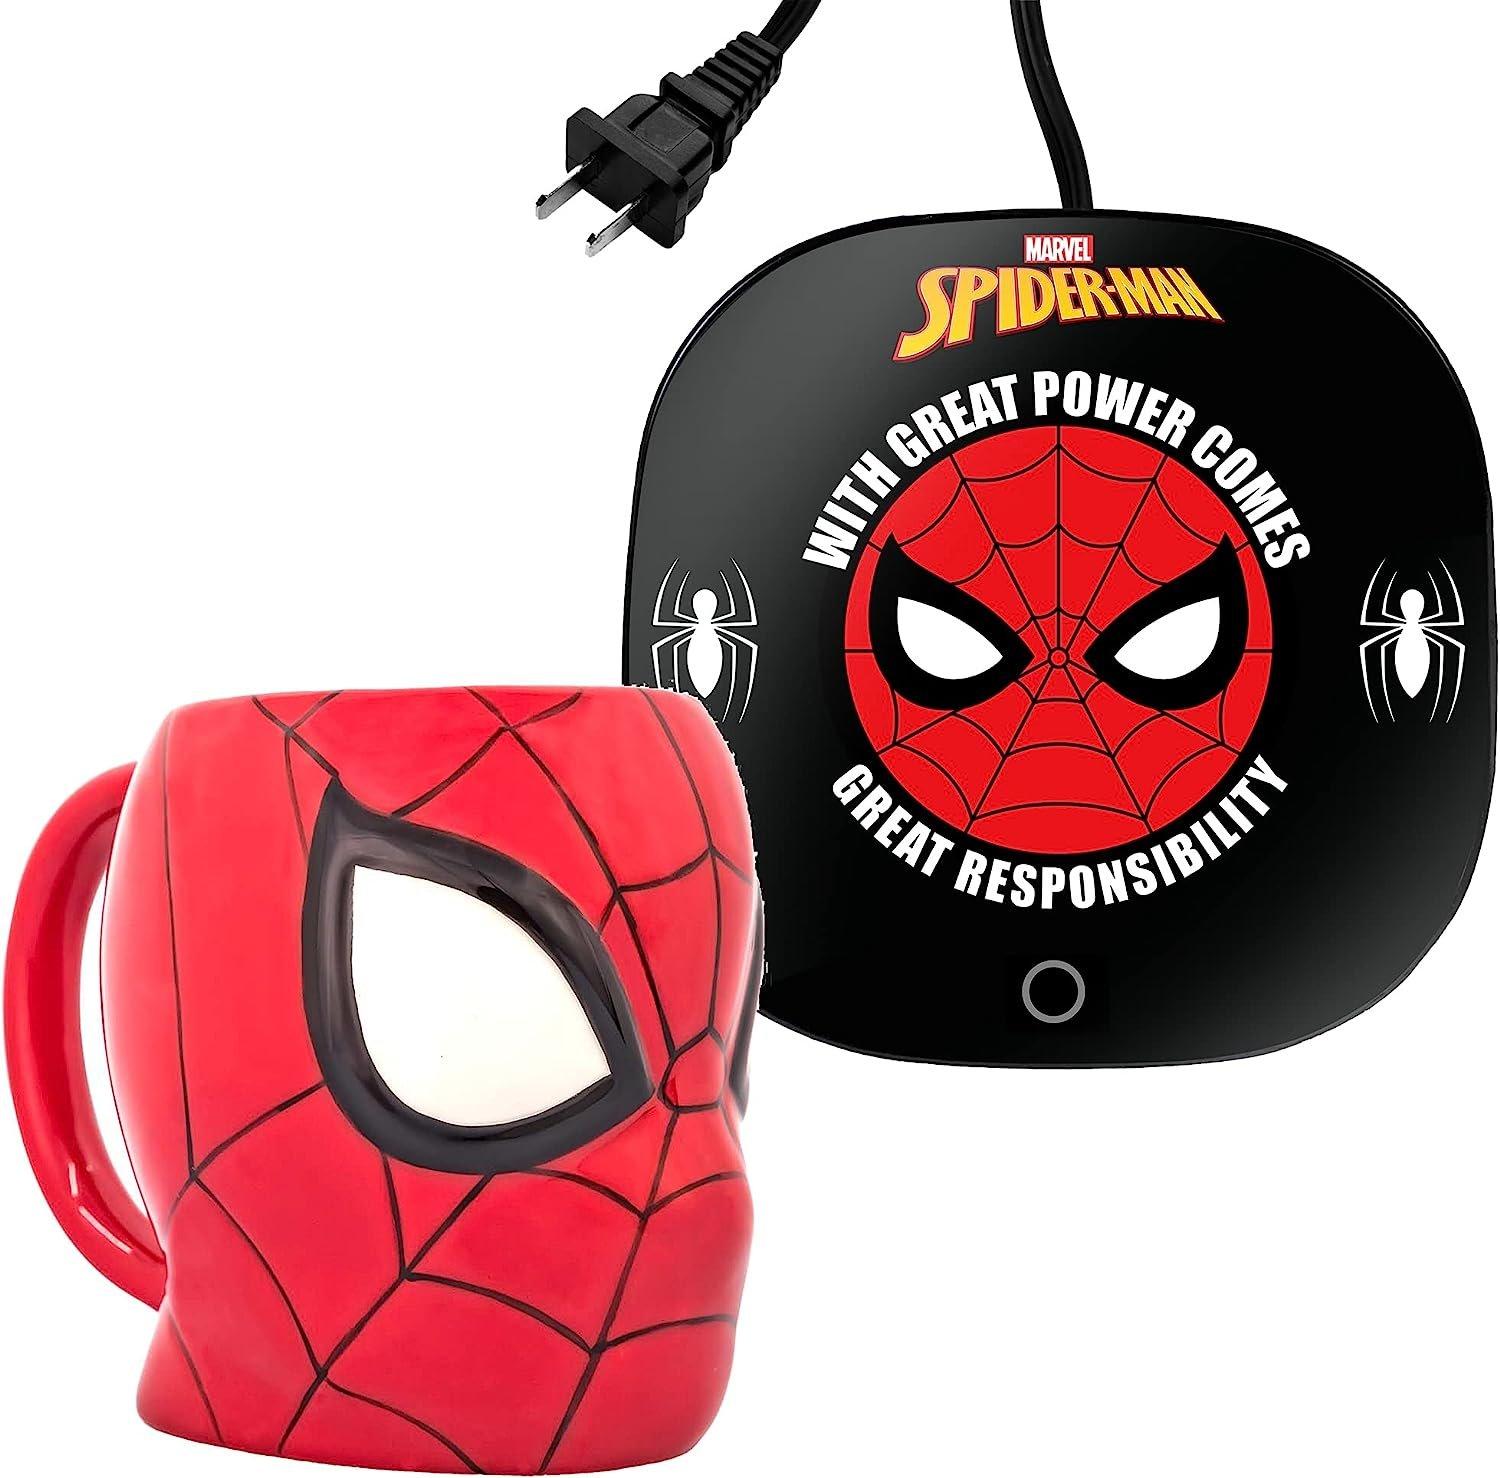 Mug Spiderman - Head  Tips for original gifts